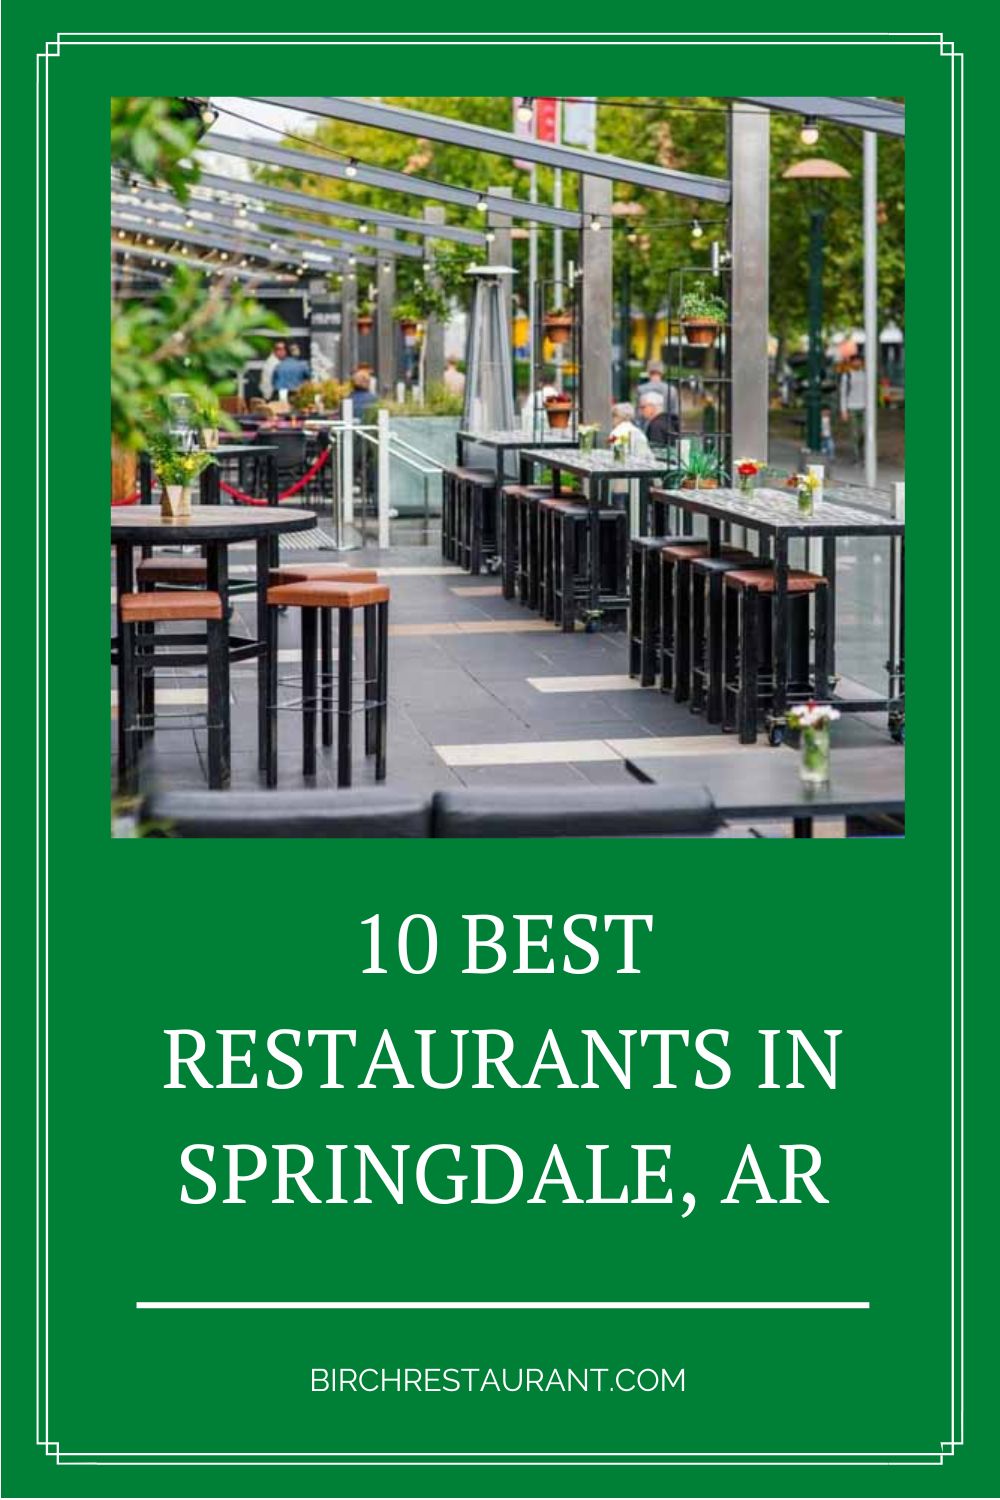 Best Restaurants in Springdale